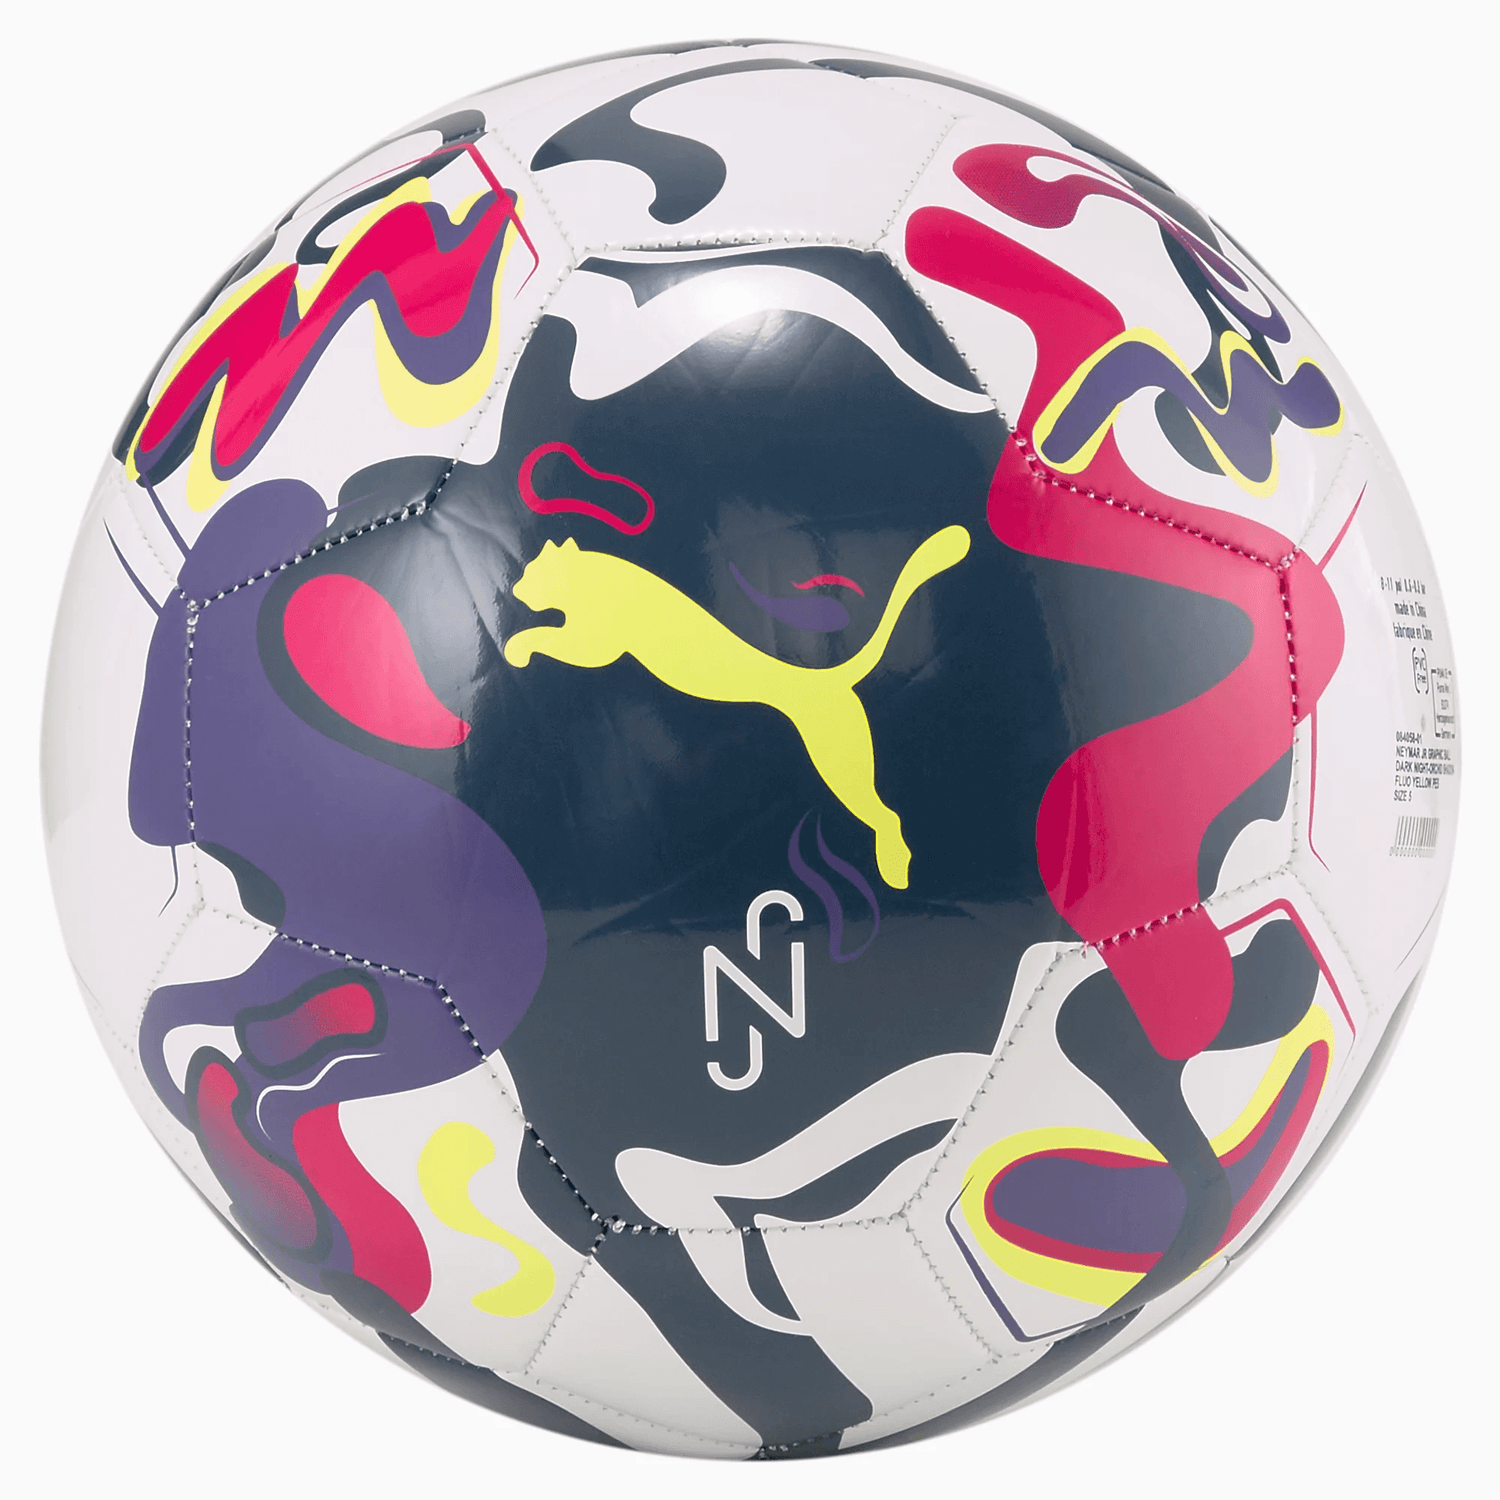 Puma Neymar Jr Graphic Soccer Ball - Dark Night-Orchid Shadow-Fluro Yellow (Back)